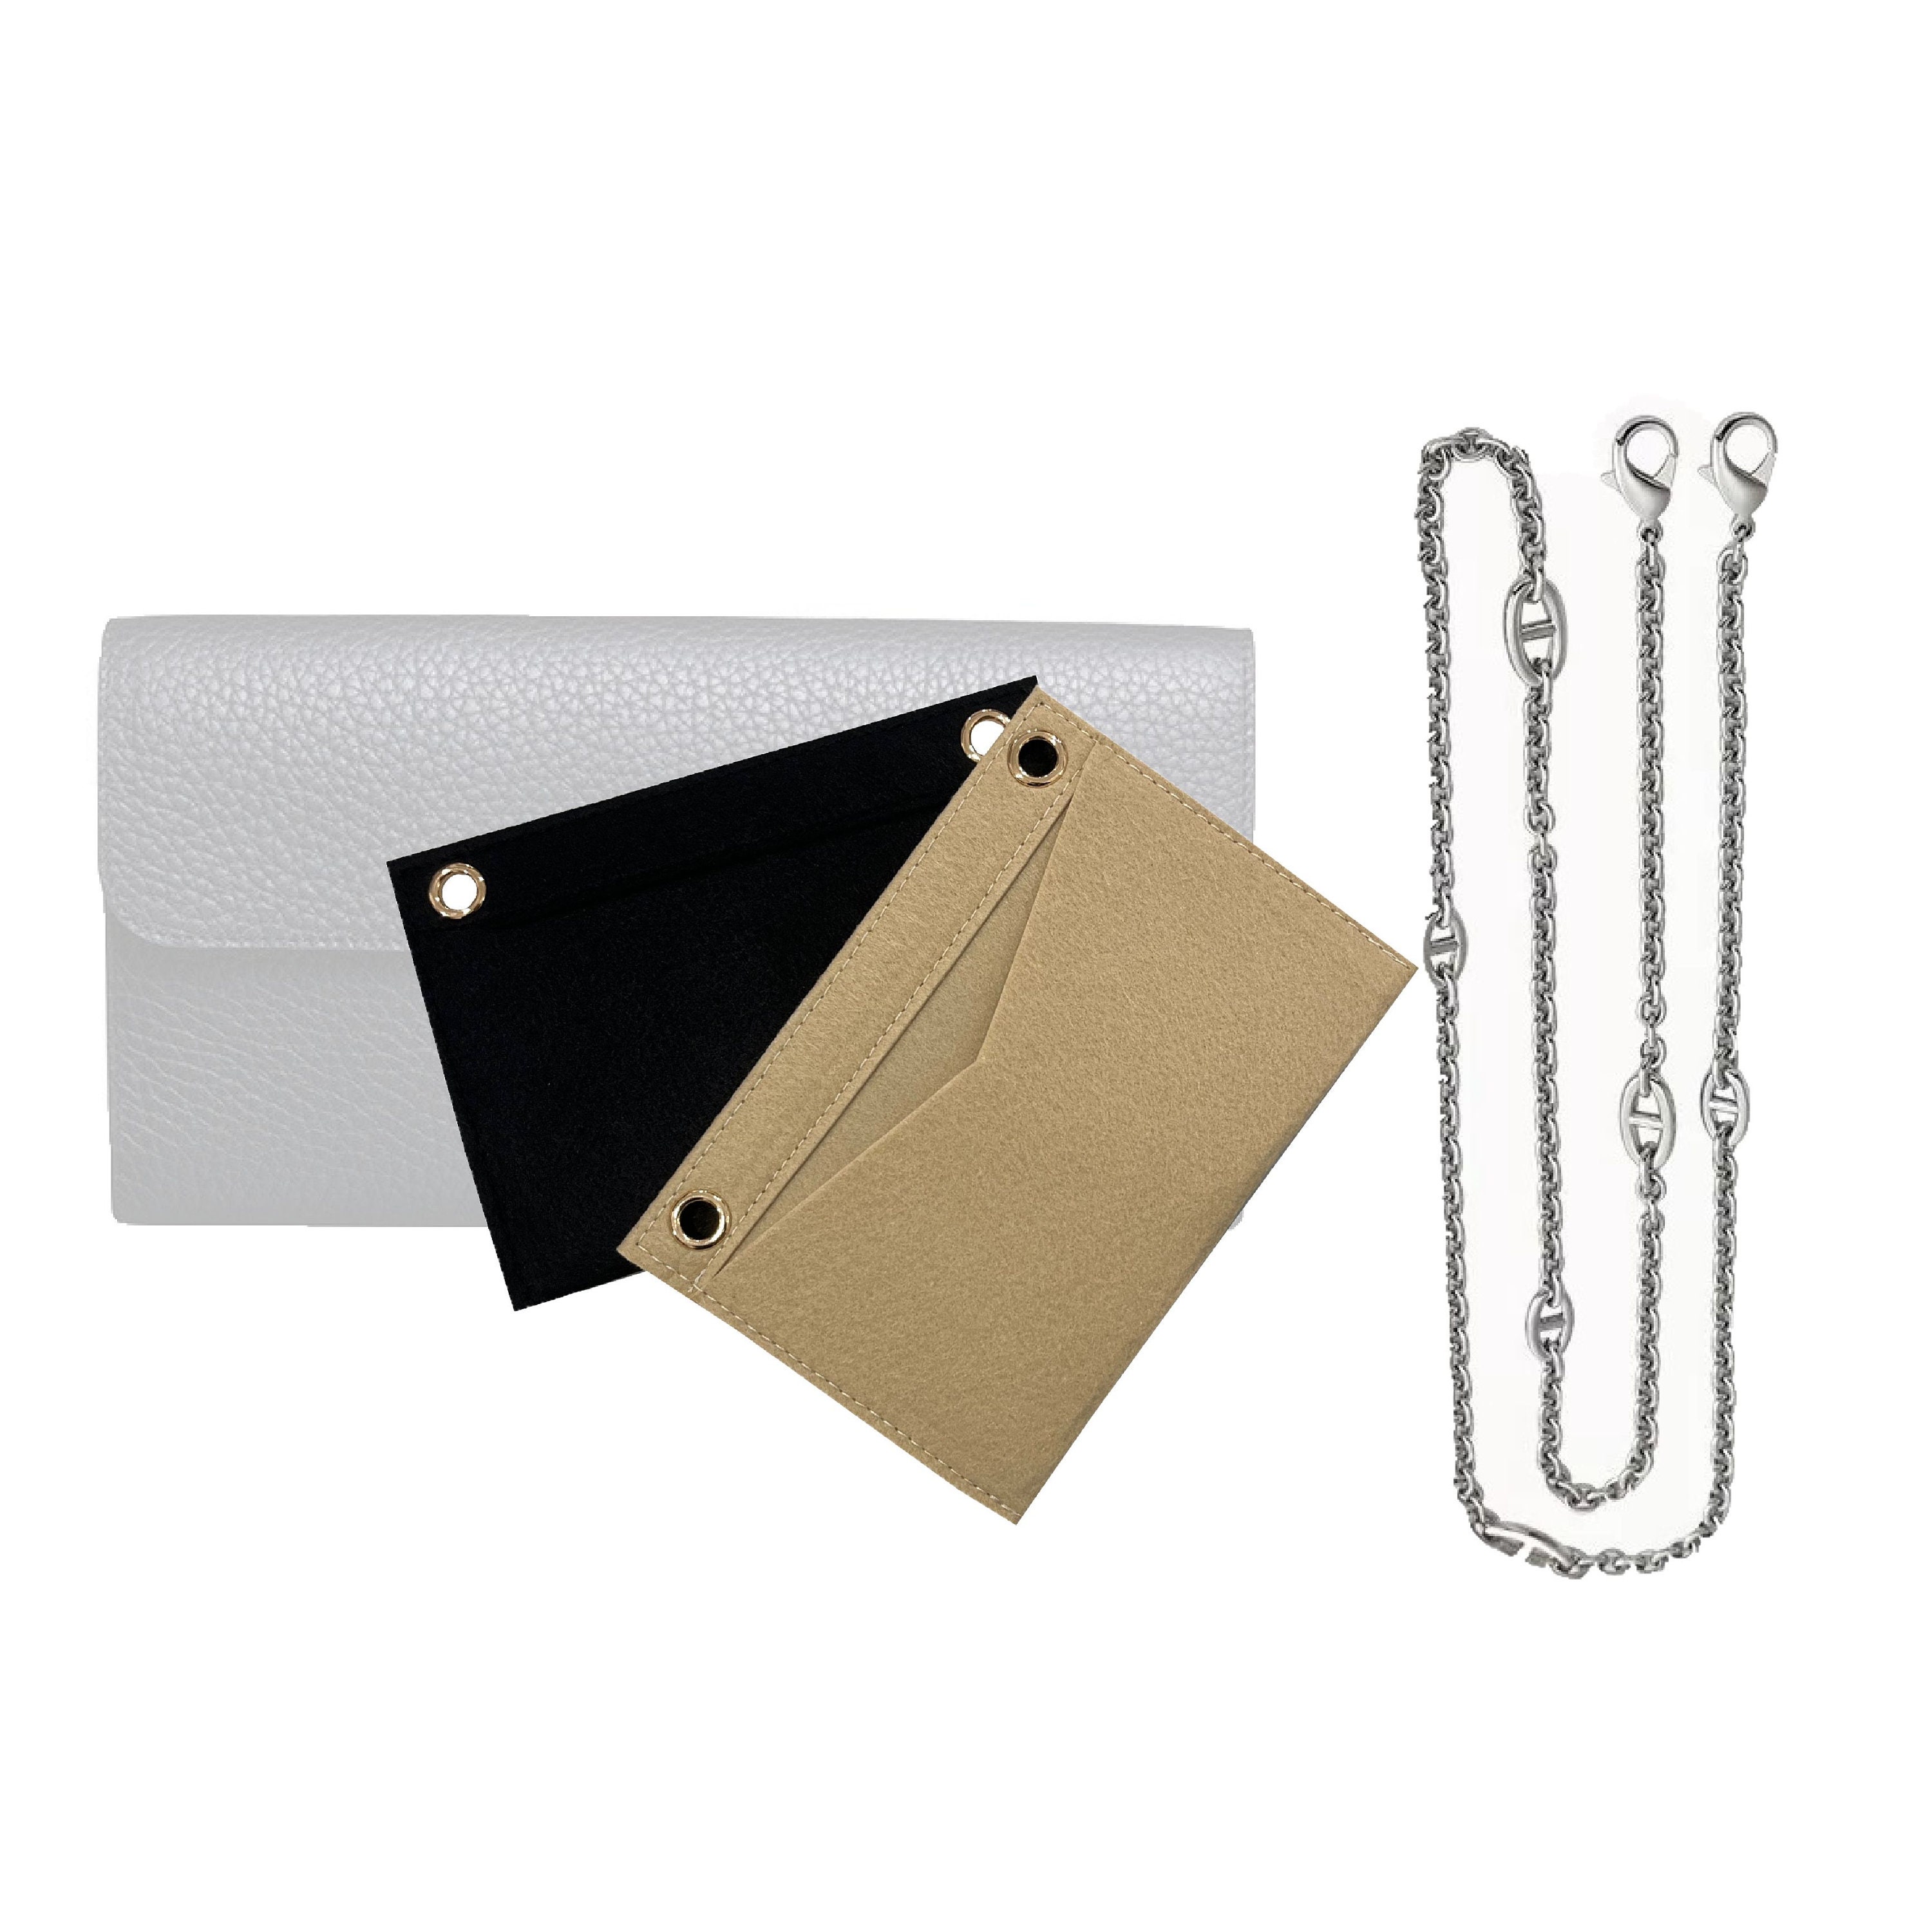 Monogram Clutch Conversion Kit zipper Bag & O Rings / 